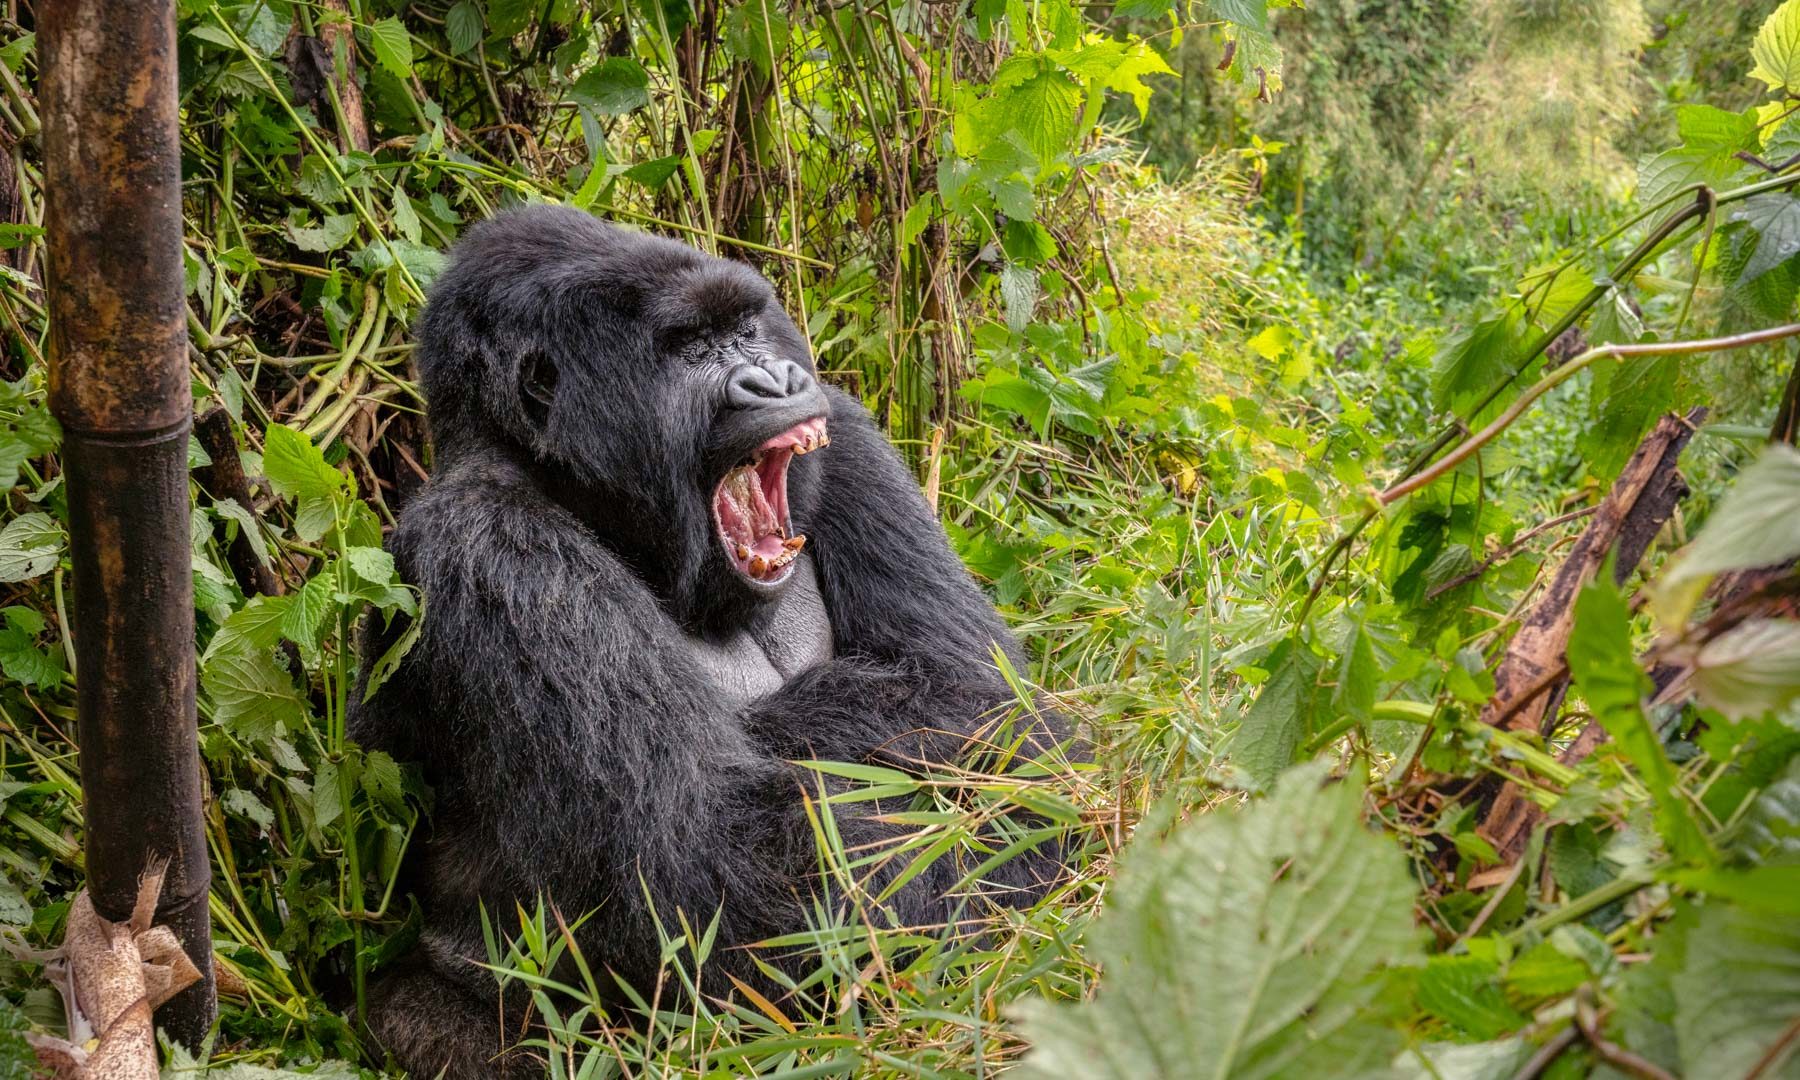 Guide to Gorilla Trekking in Africa